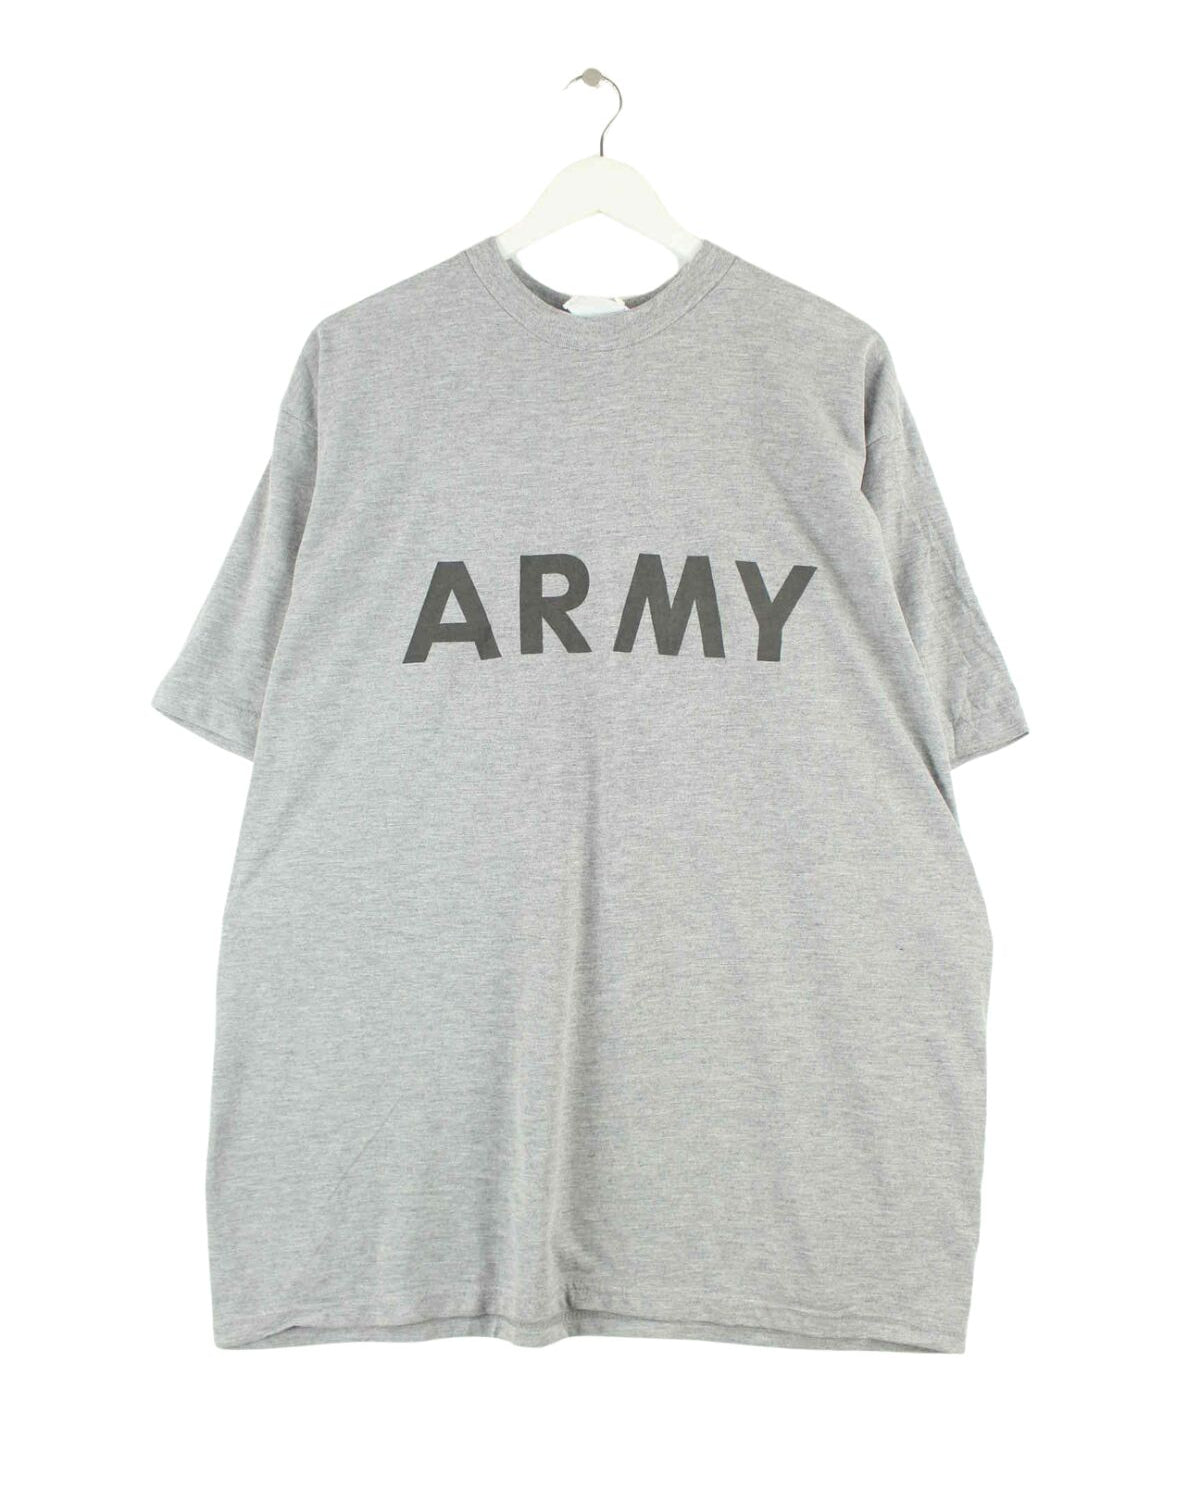 Vintage Army Print T-Shirt Grau XXL (front image)